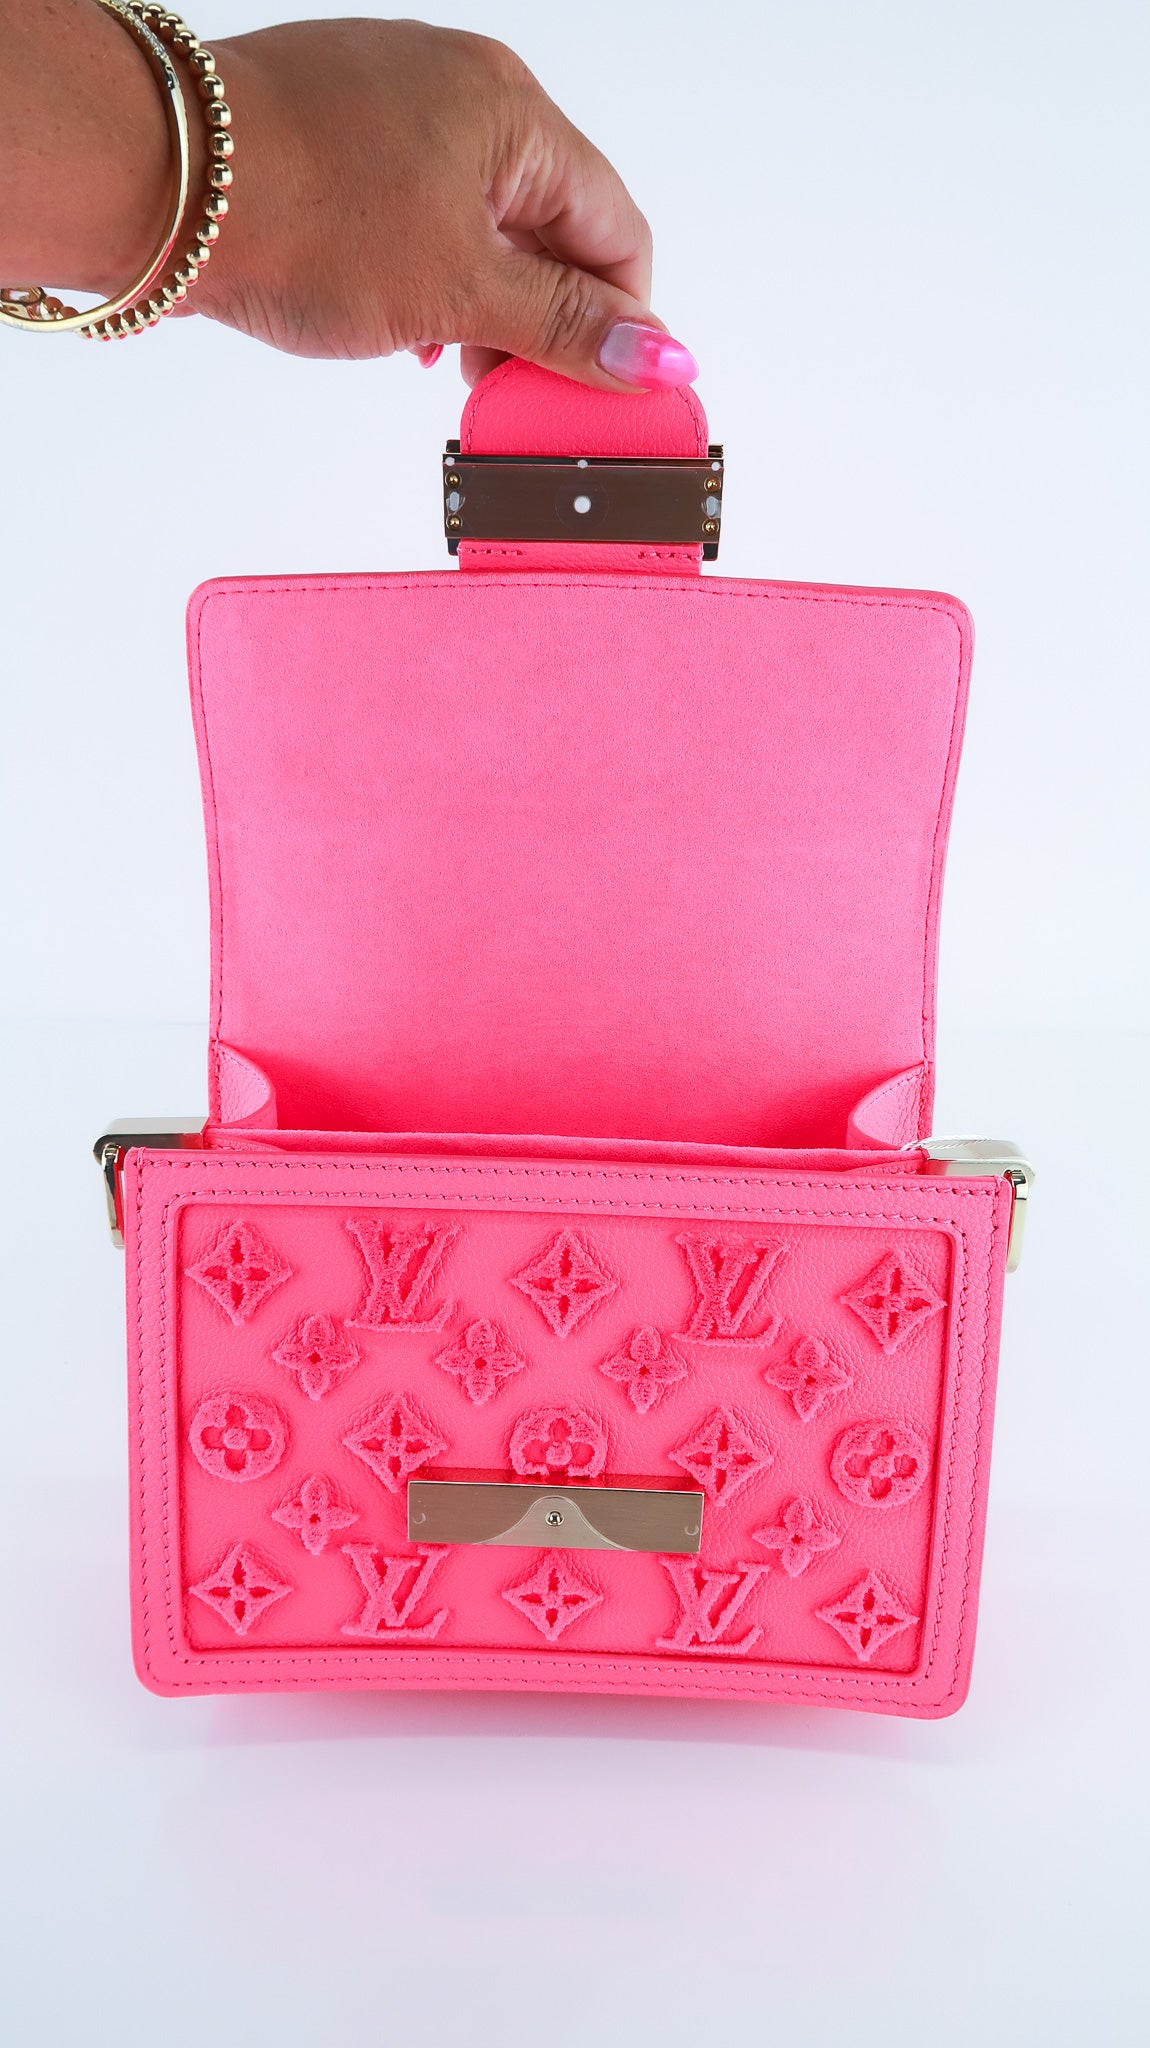 Louis Vuitton Rose Flou Tufted Monogram Leather Mini Dauphine Bag